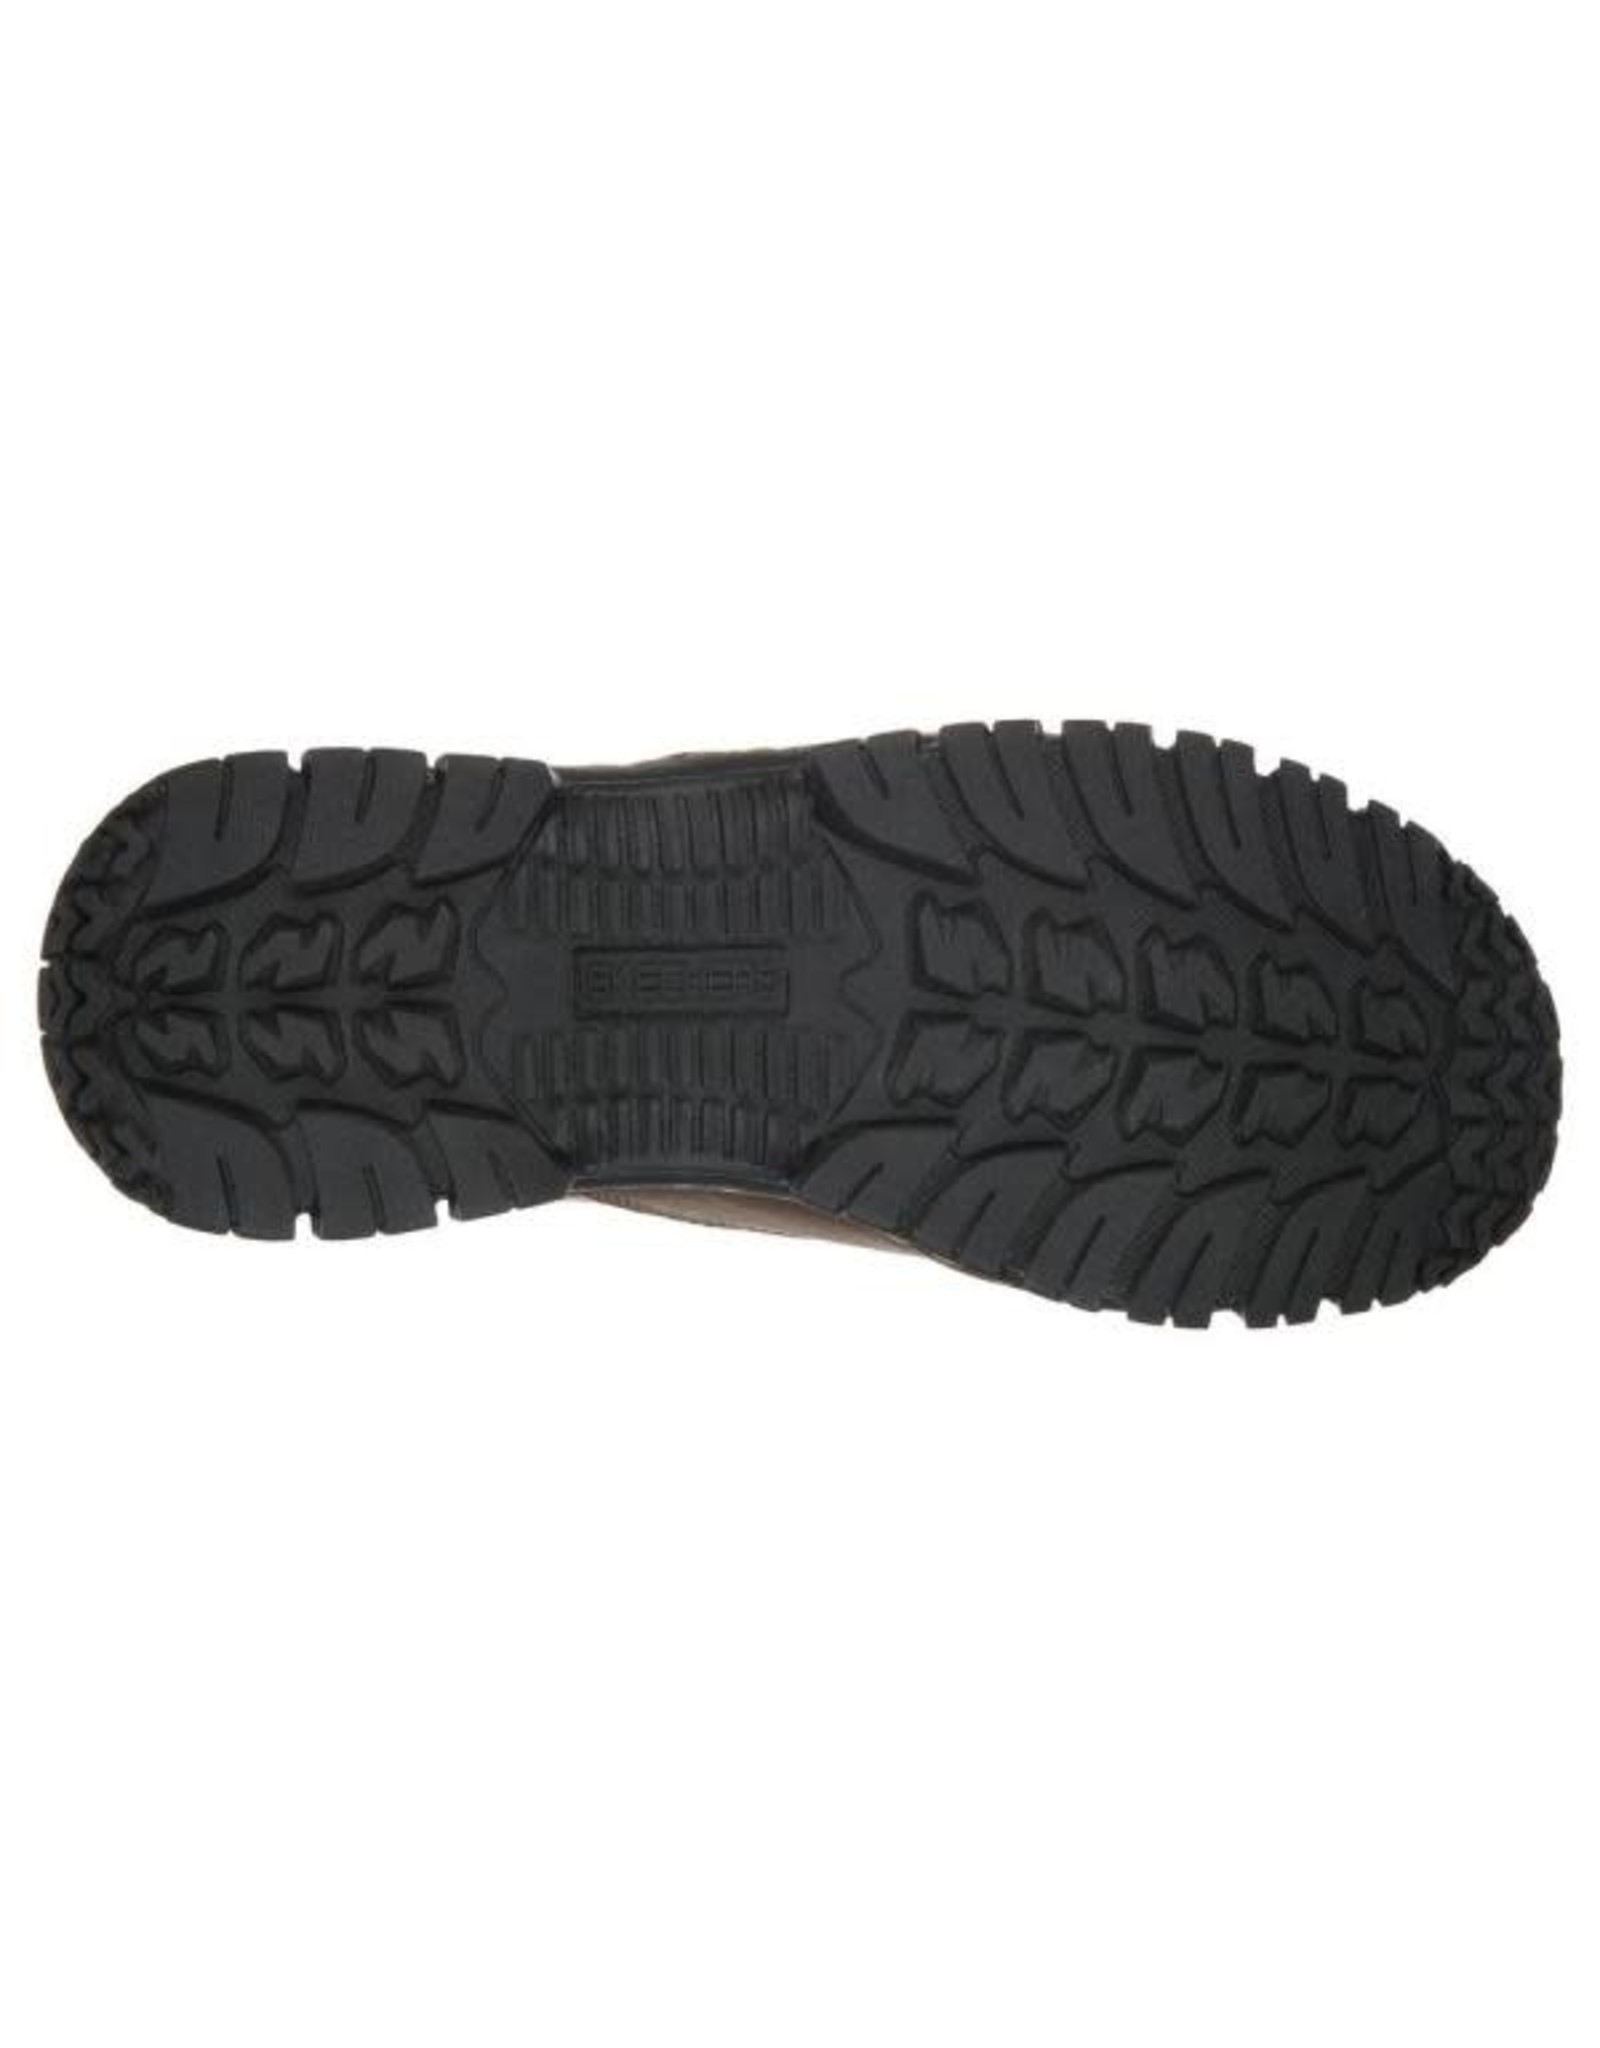 Skechers Men's Hartan 77066 Brown Slip On Steel Toe Work Shoes Discontinued